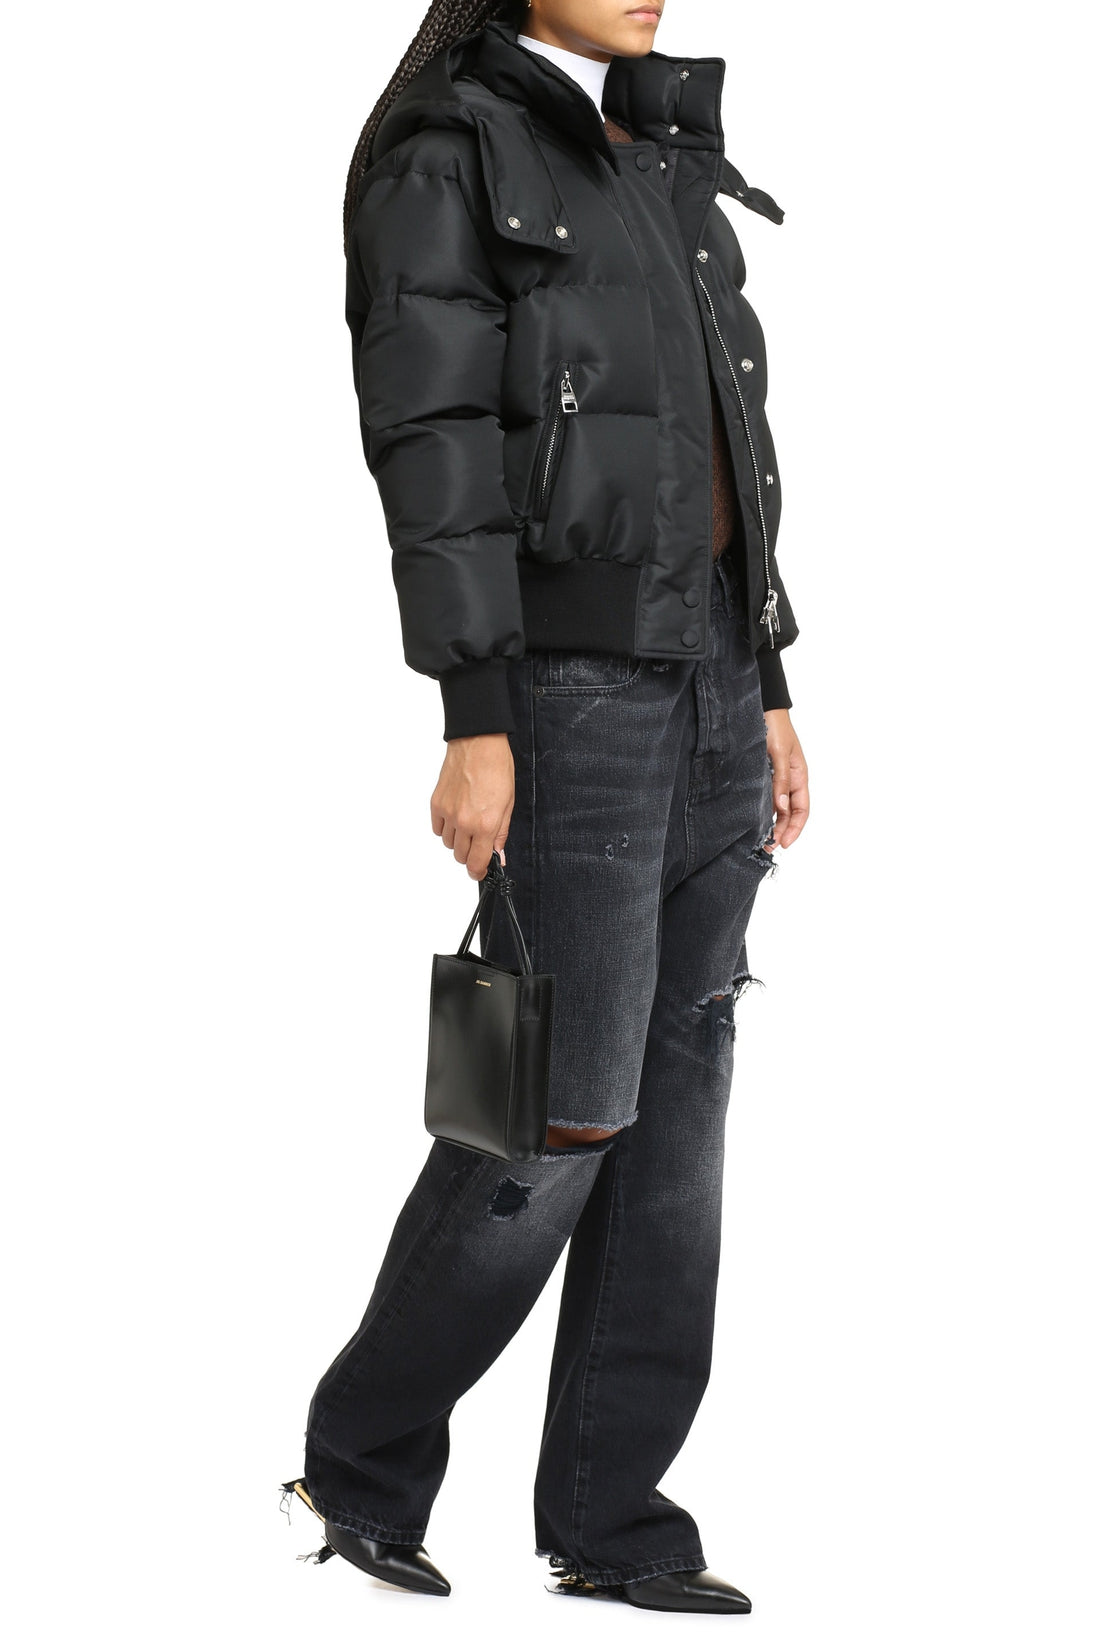 Alexander McQueen-OUTLET-SALE-Hooded down jacket-ARCHIVIST